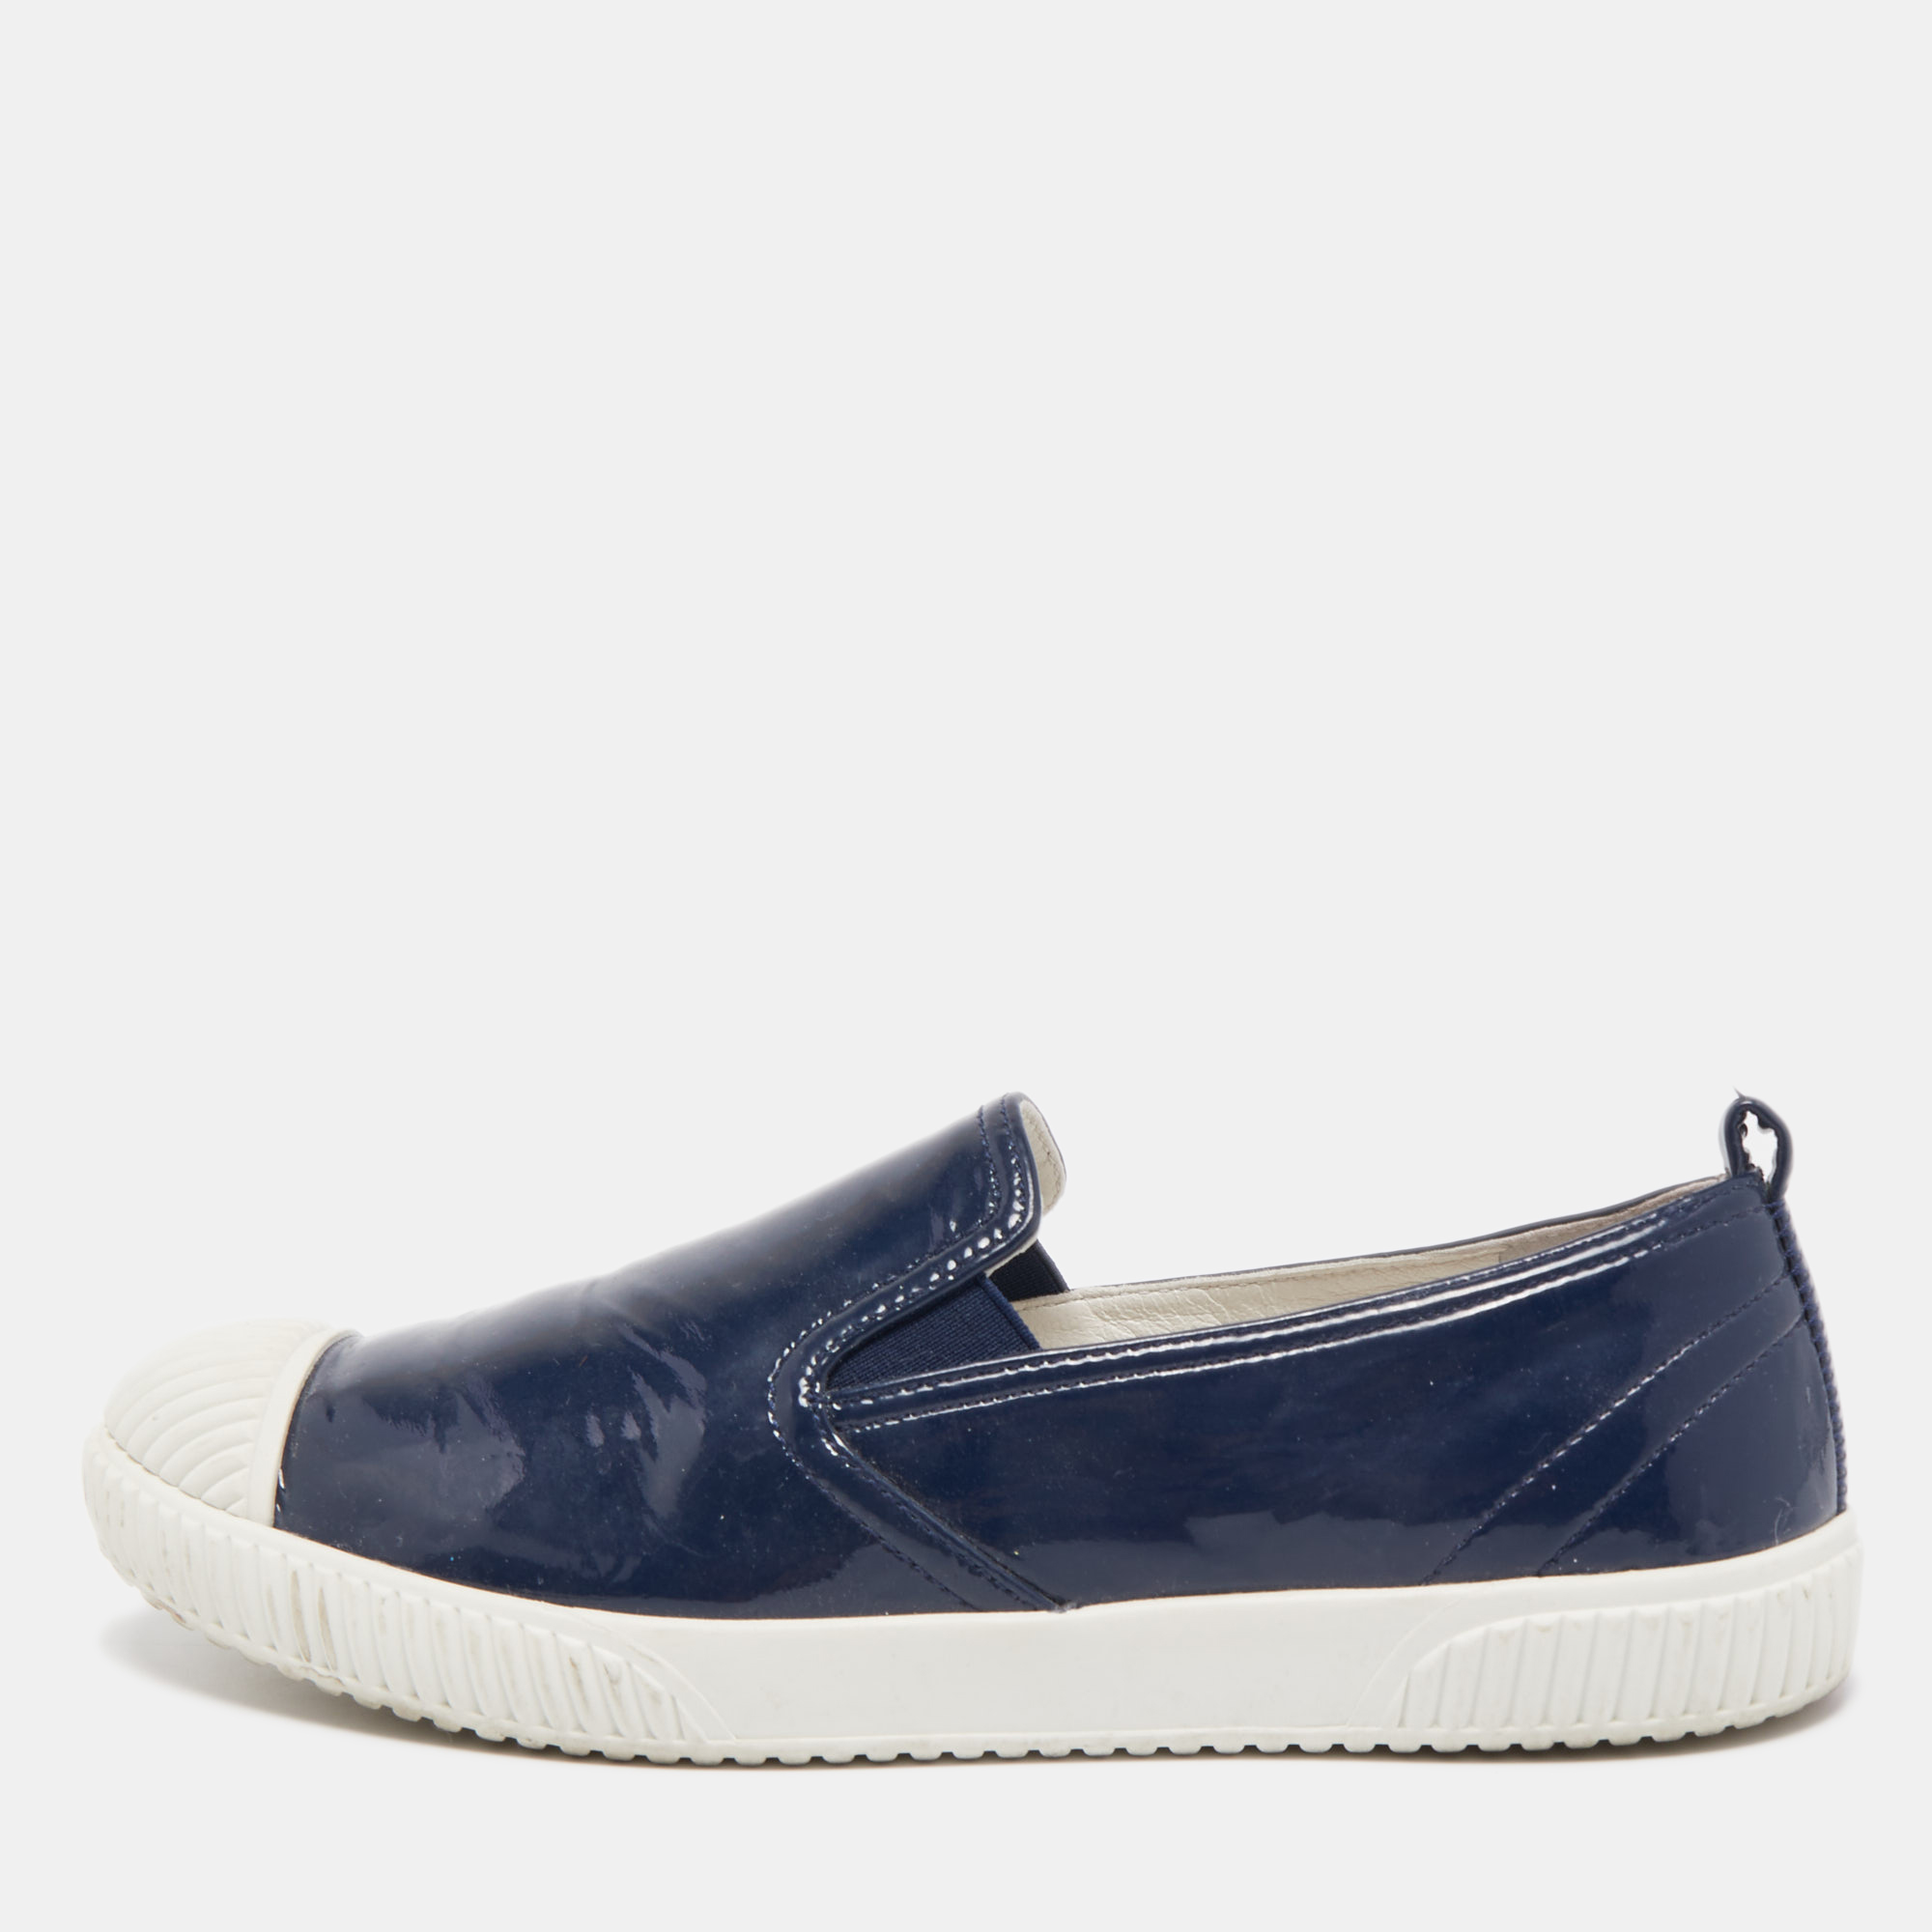 Prada Sport Navy Blue Patent Leather Slip-On Sneakers Size 37.5